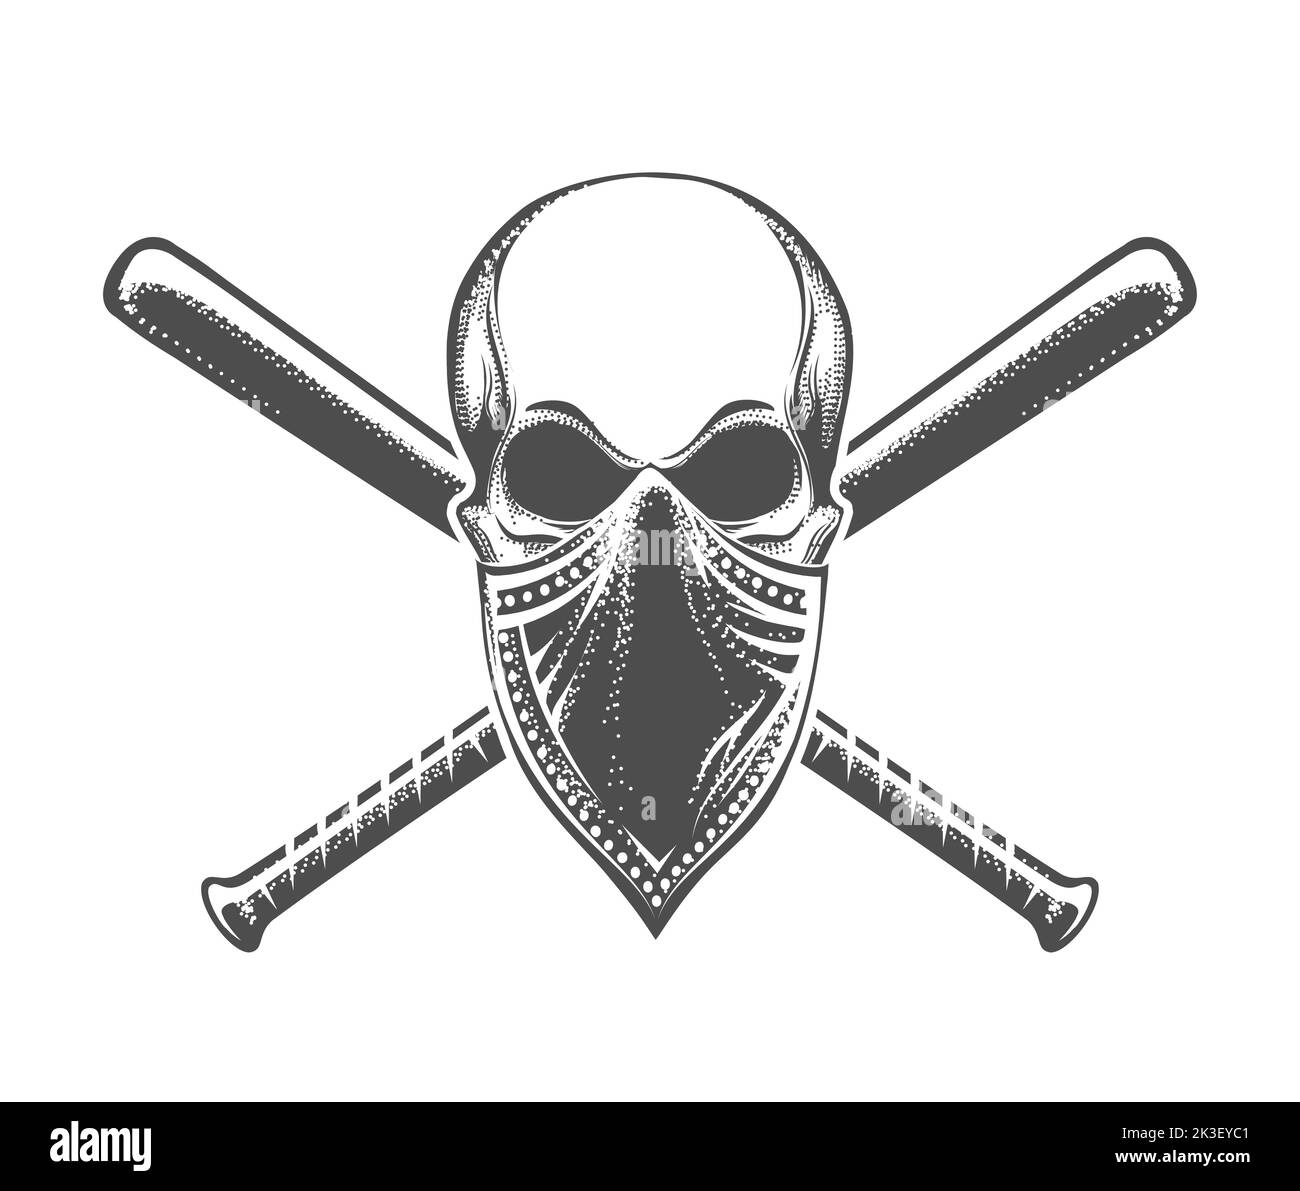 Skull in Bandana and Crossed Baseball Bats Tattoo on white Background. Vector Illustration. Stock Vector